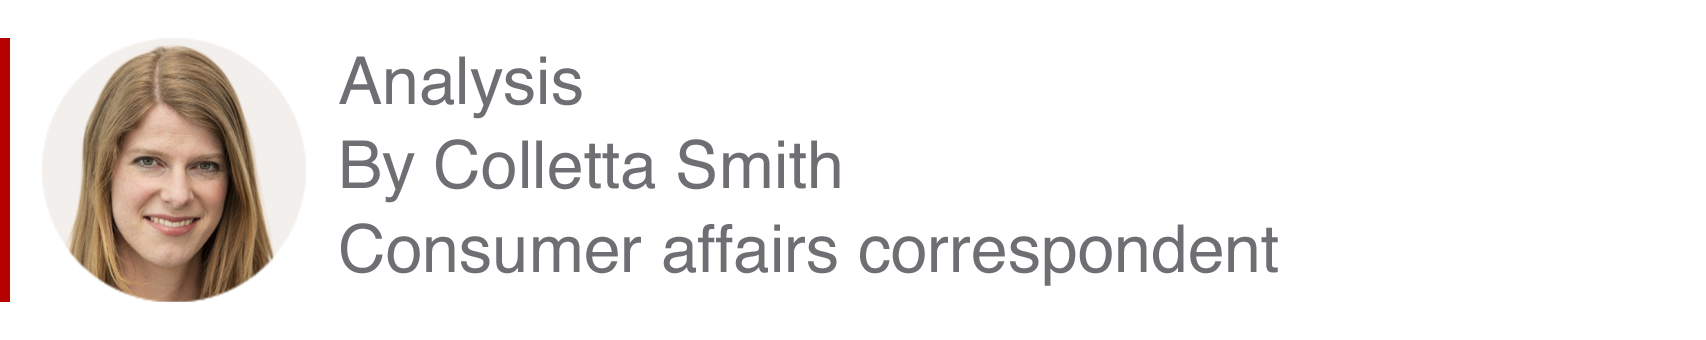 Analysis box by Colletta Smith, Consumer affairs correspondent